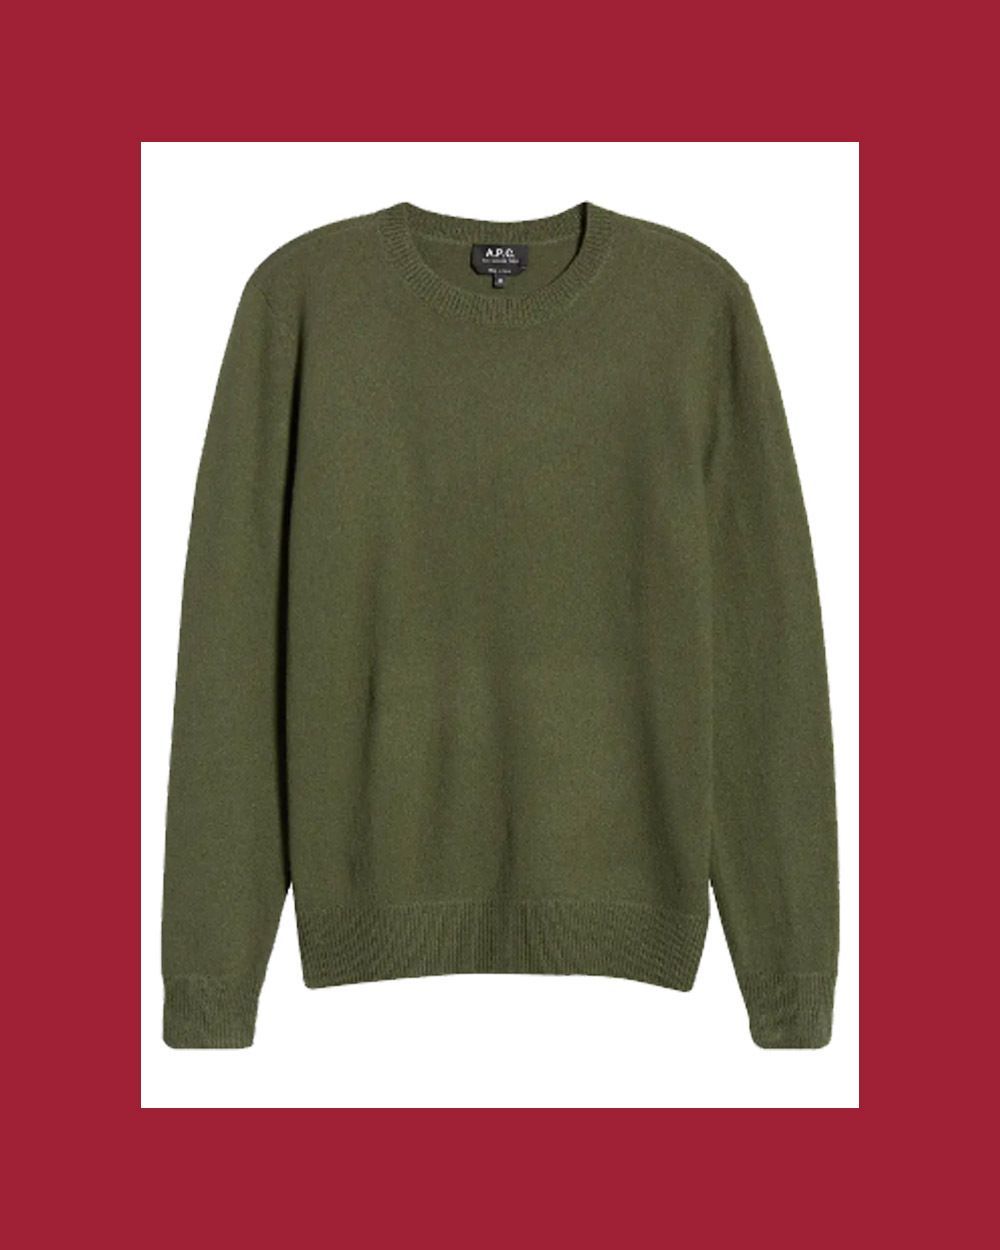 Merino Wool Crewneck Sweater